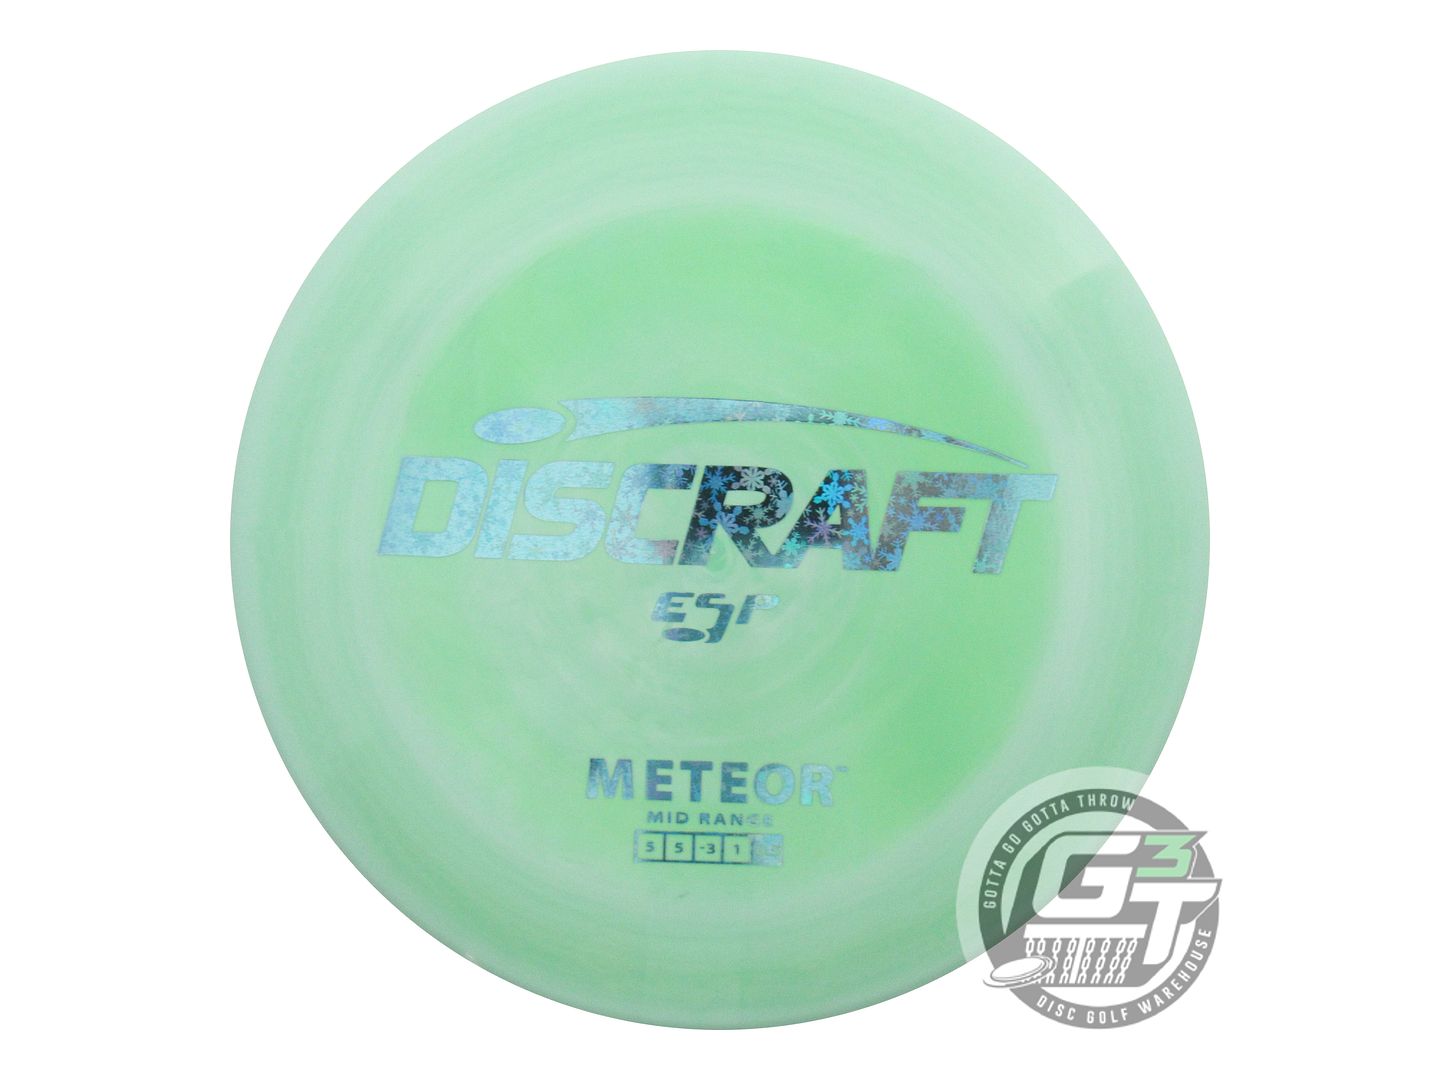 Discraft ESP Meteor Midrange Golf Disc (Individually Listed)